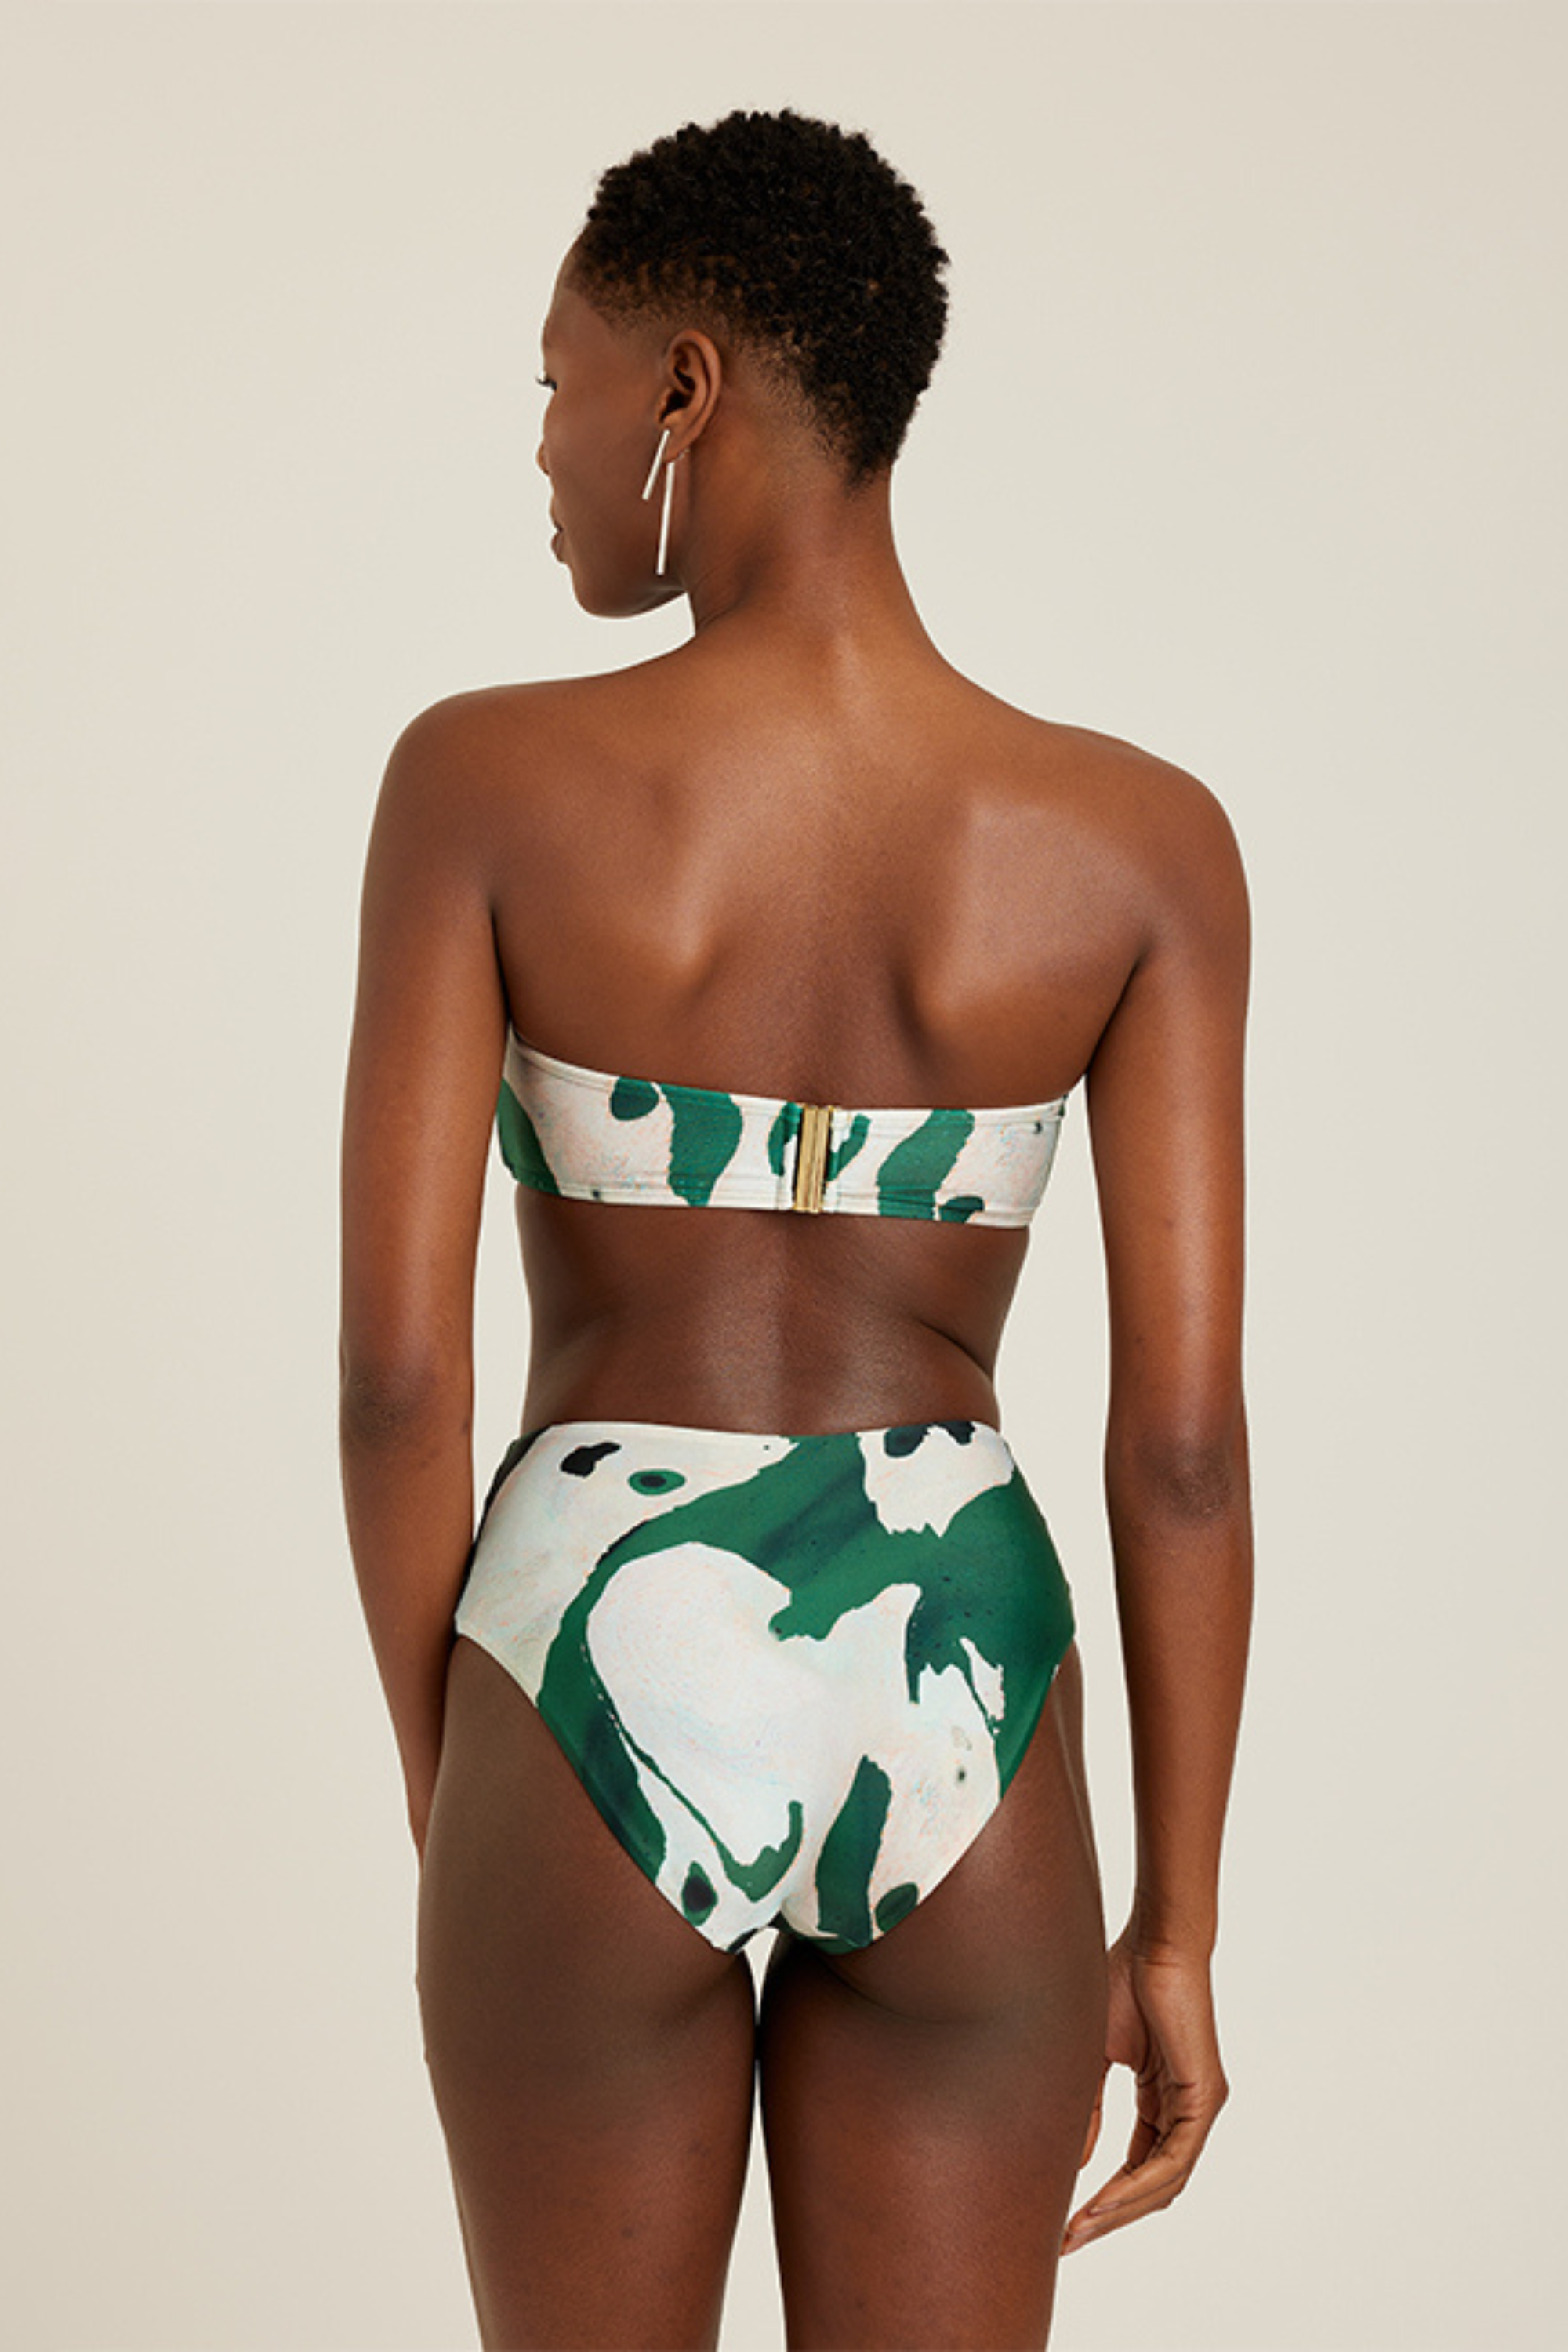 Green Coast bandeau bikini - Lenny Niemeyer